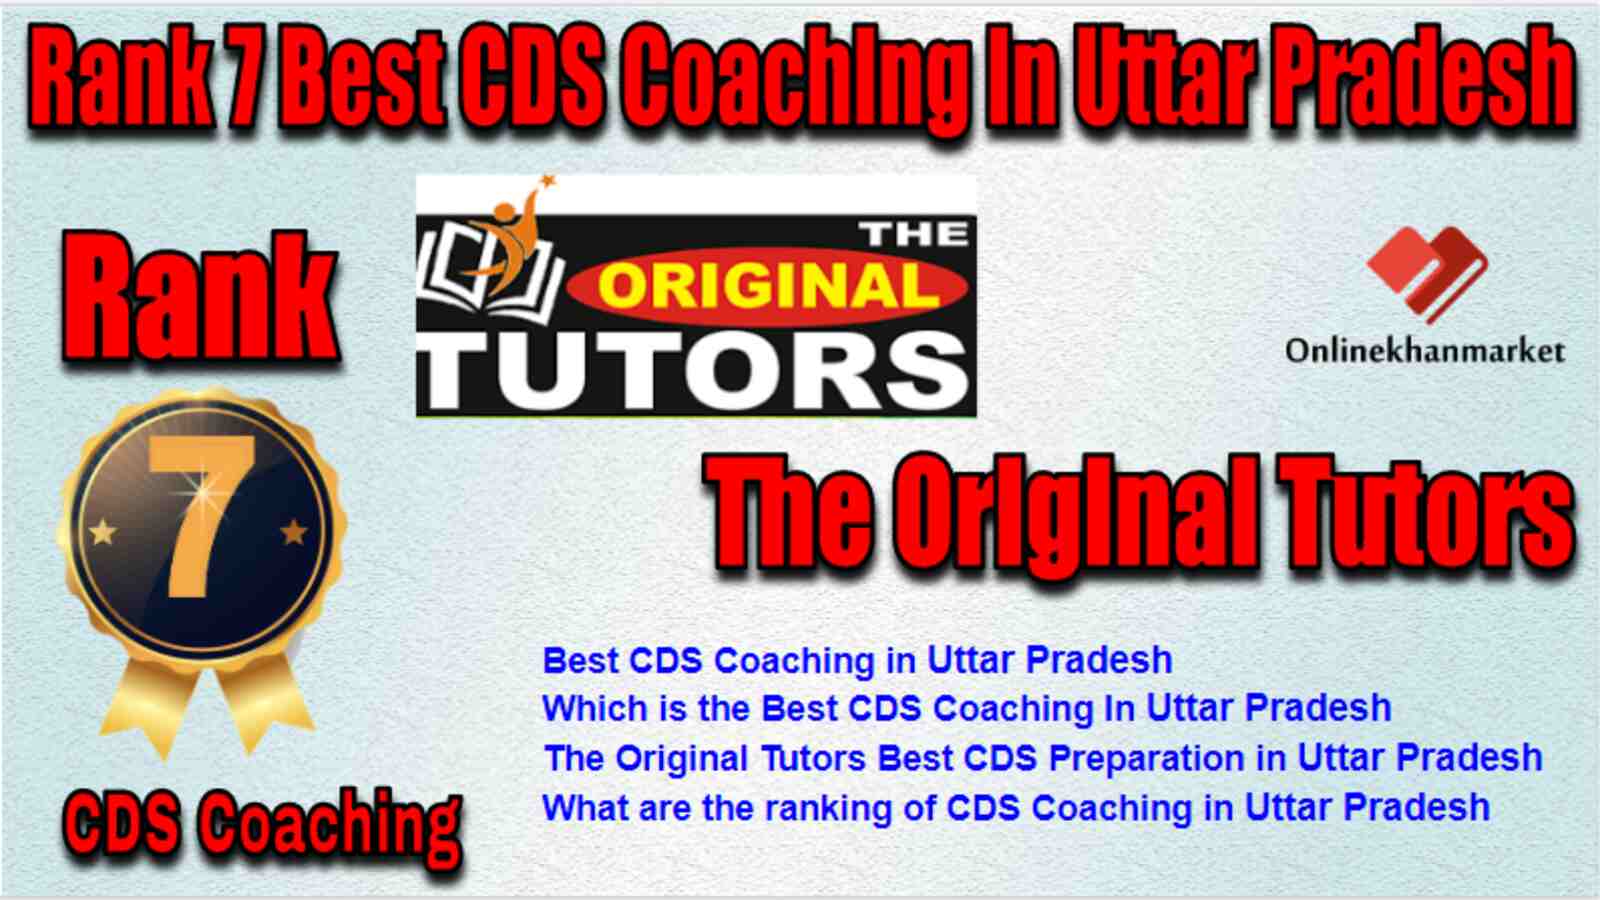 Rank 7 Best CDS Coaching in Uttar Pradesh